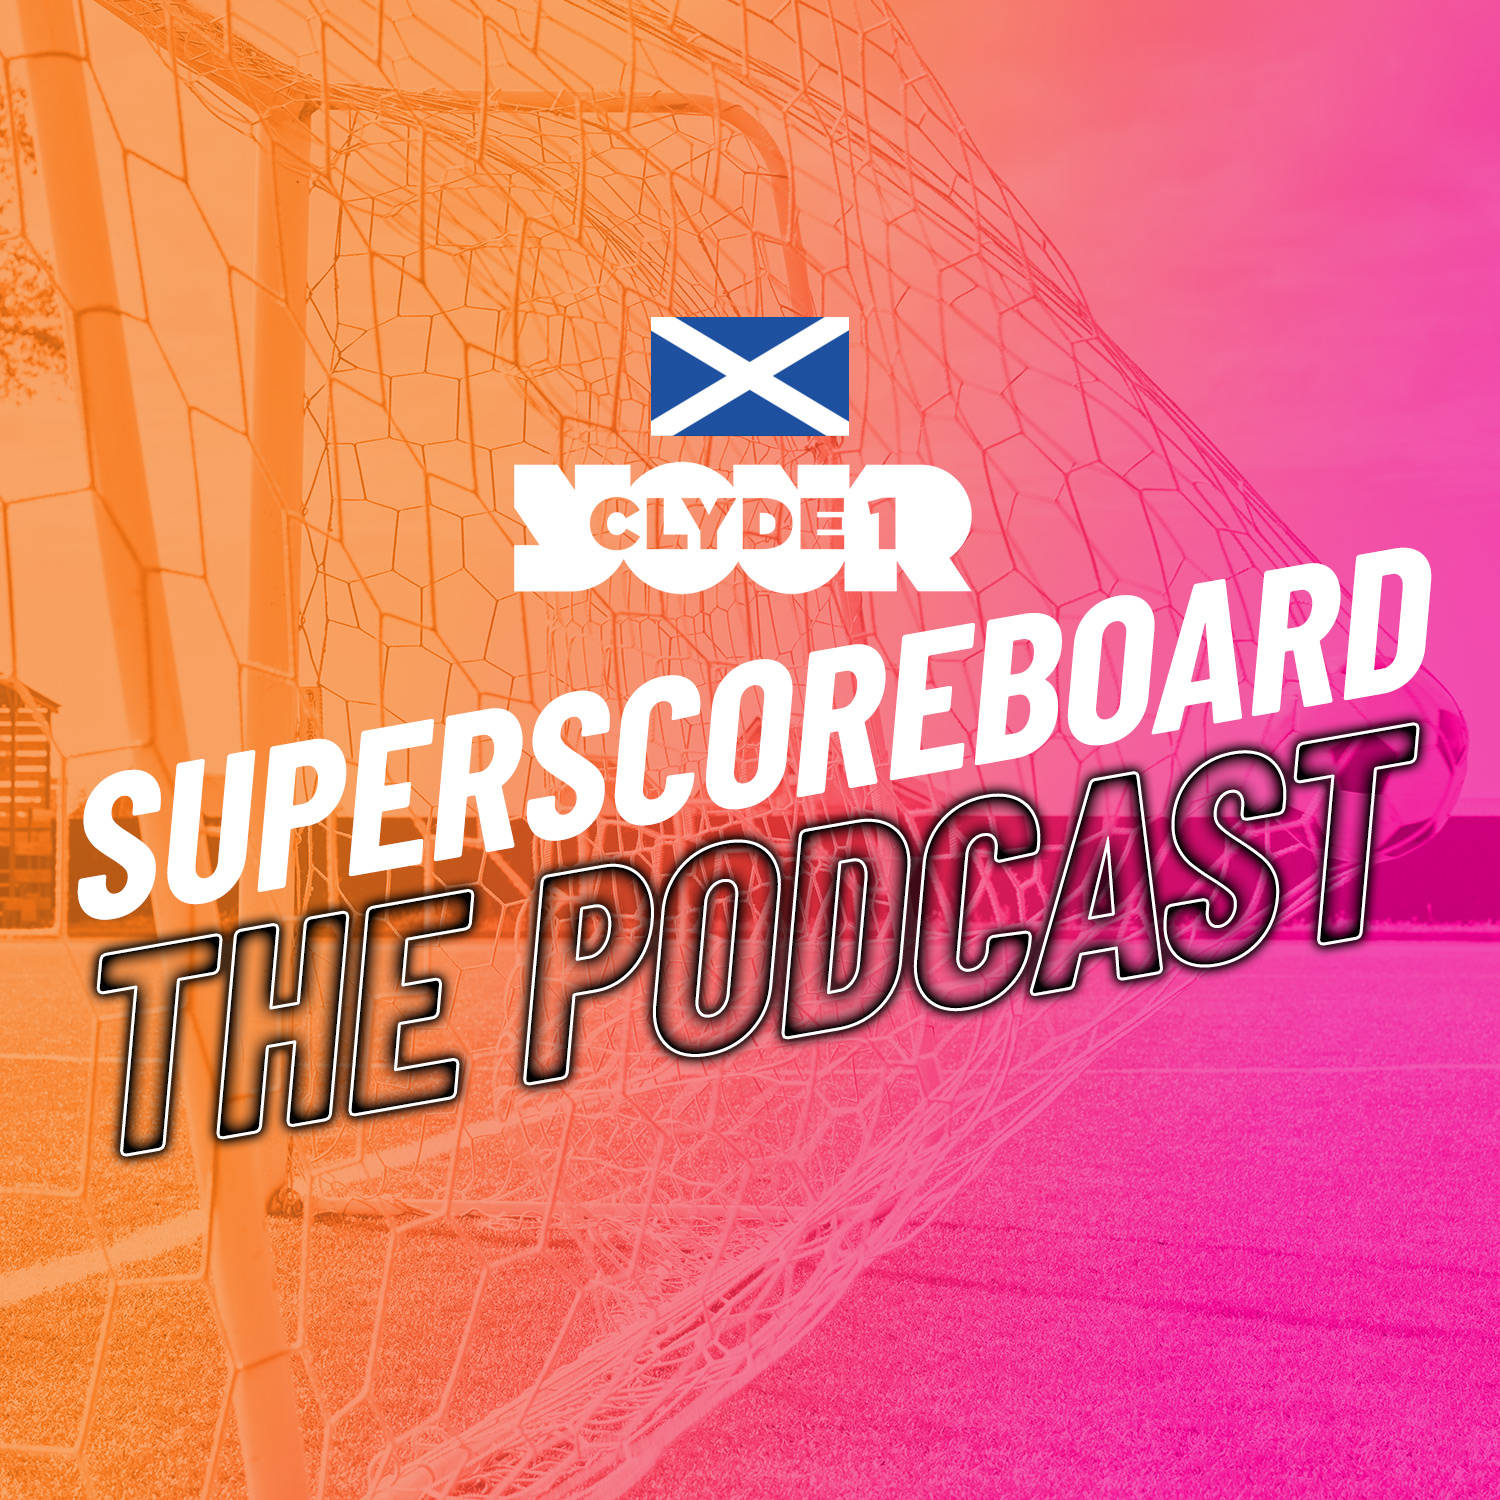 Saturday 16th March Clyde 1 Superscoreboard